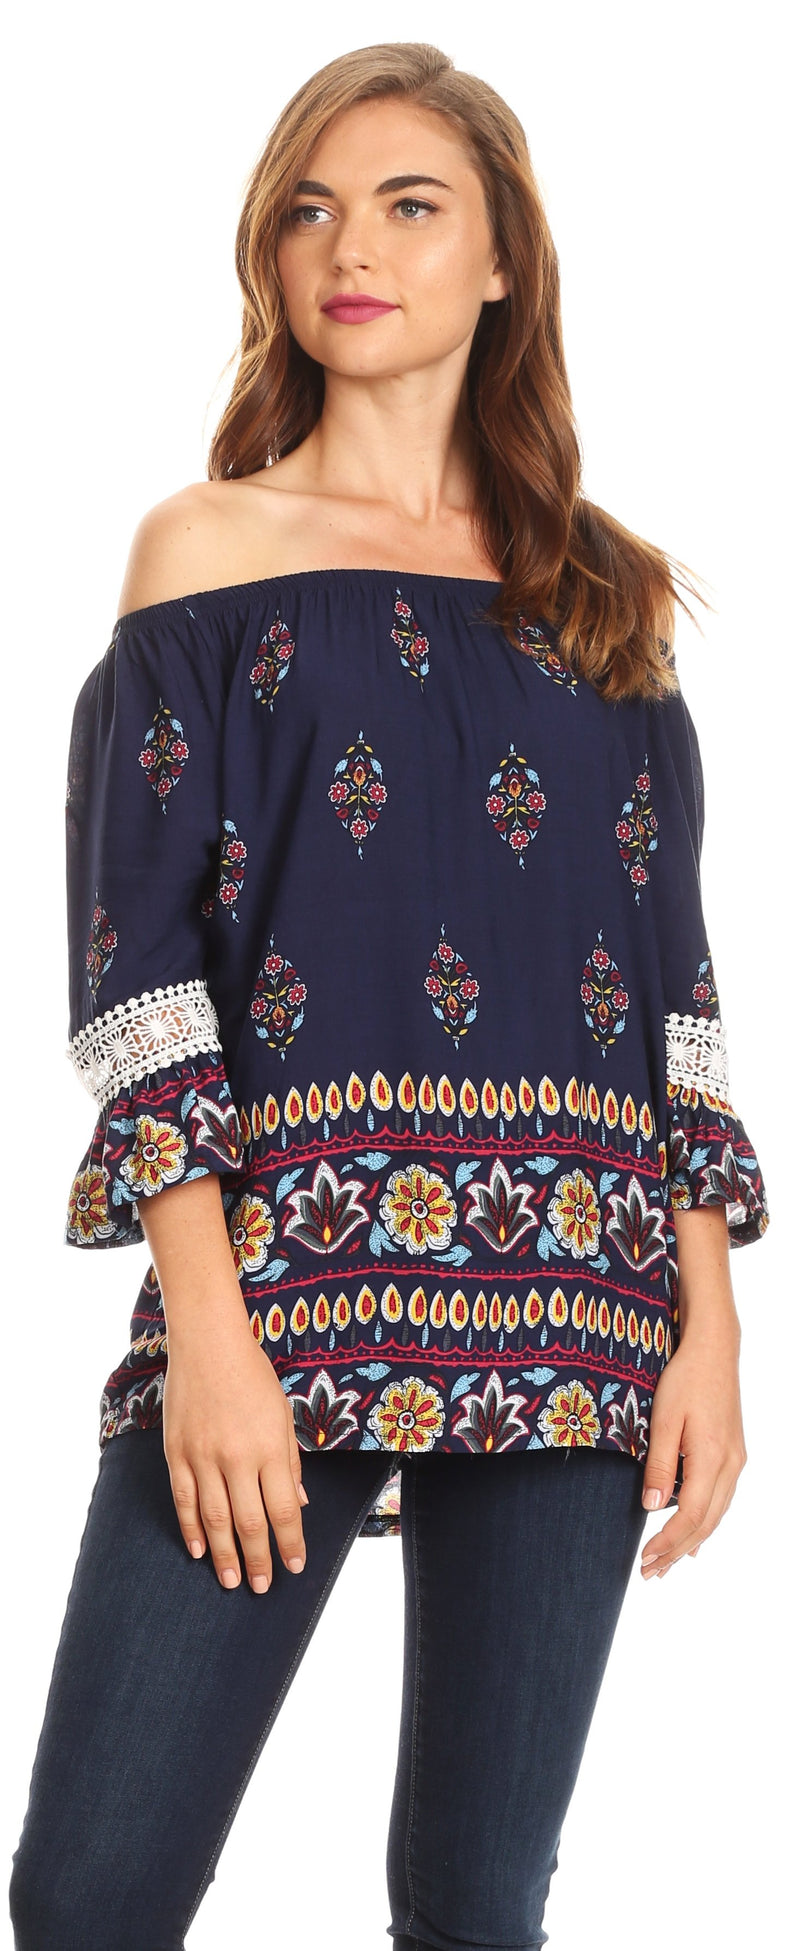 Sakkas Licia Peasant Boho Off-shoulder Top Blouse Floral Paisley with Crochet Lace